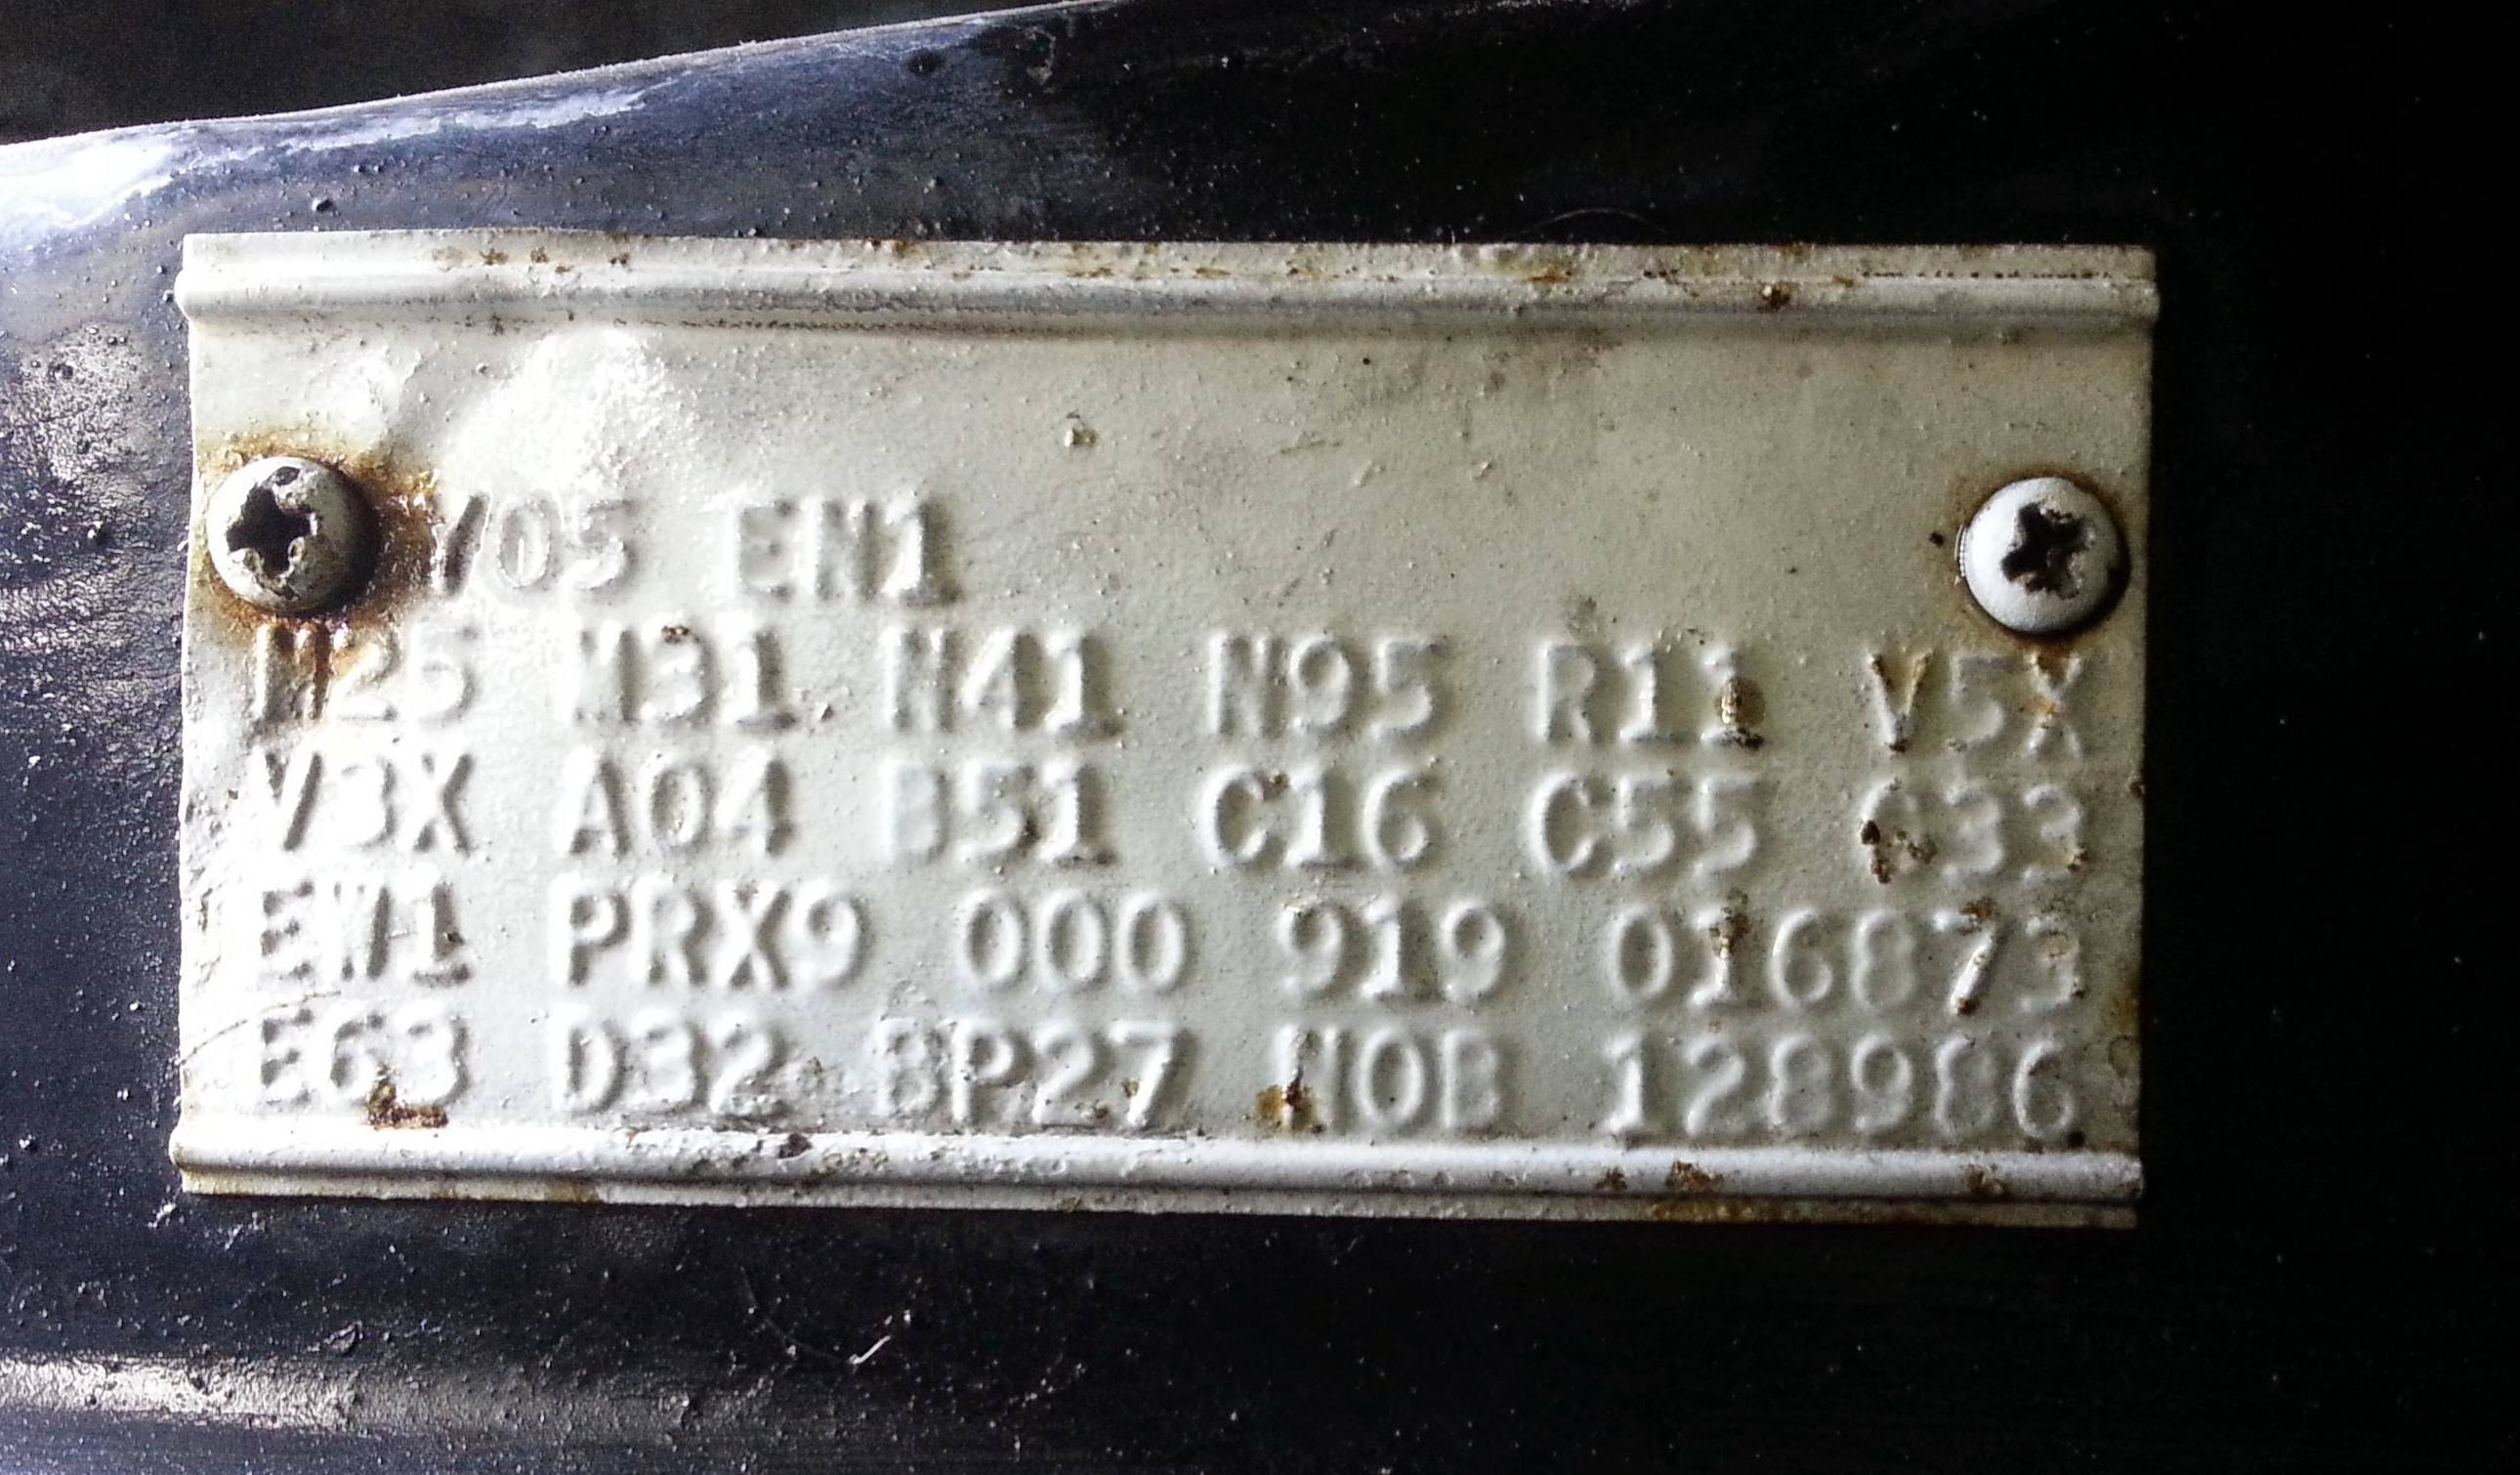 Fender tag 128986 (2).jpg